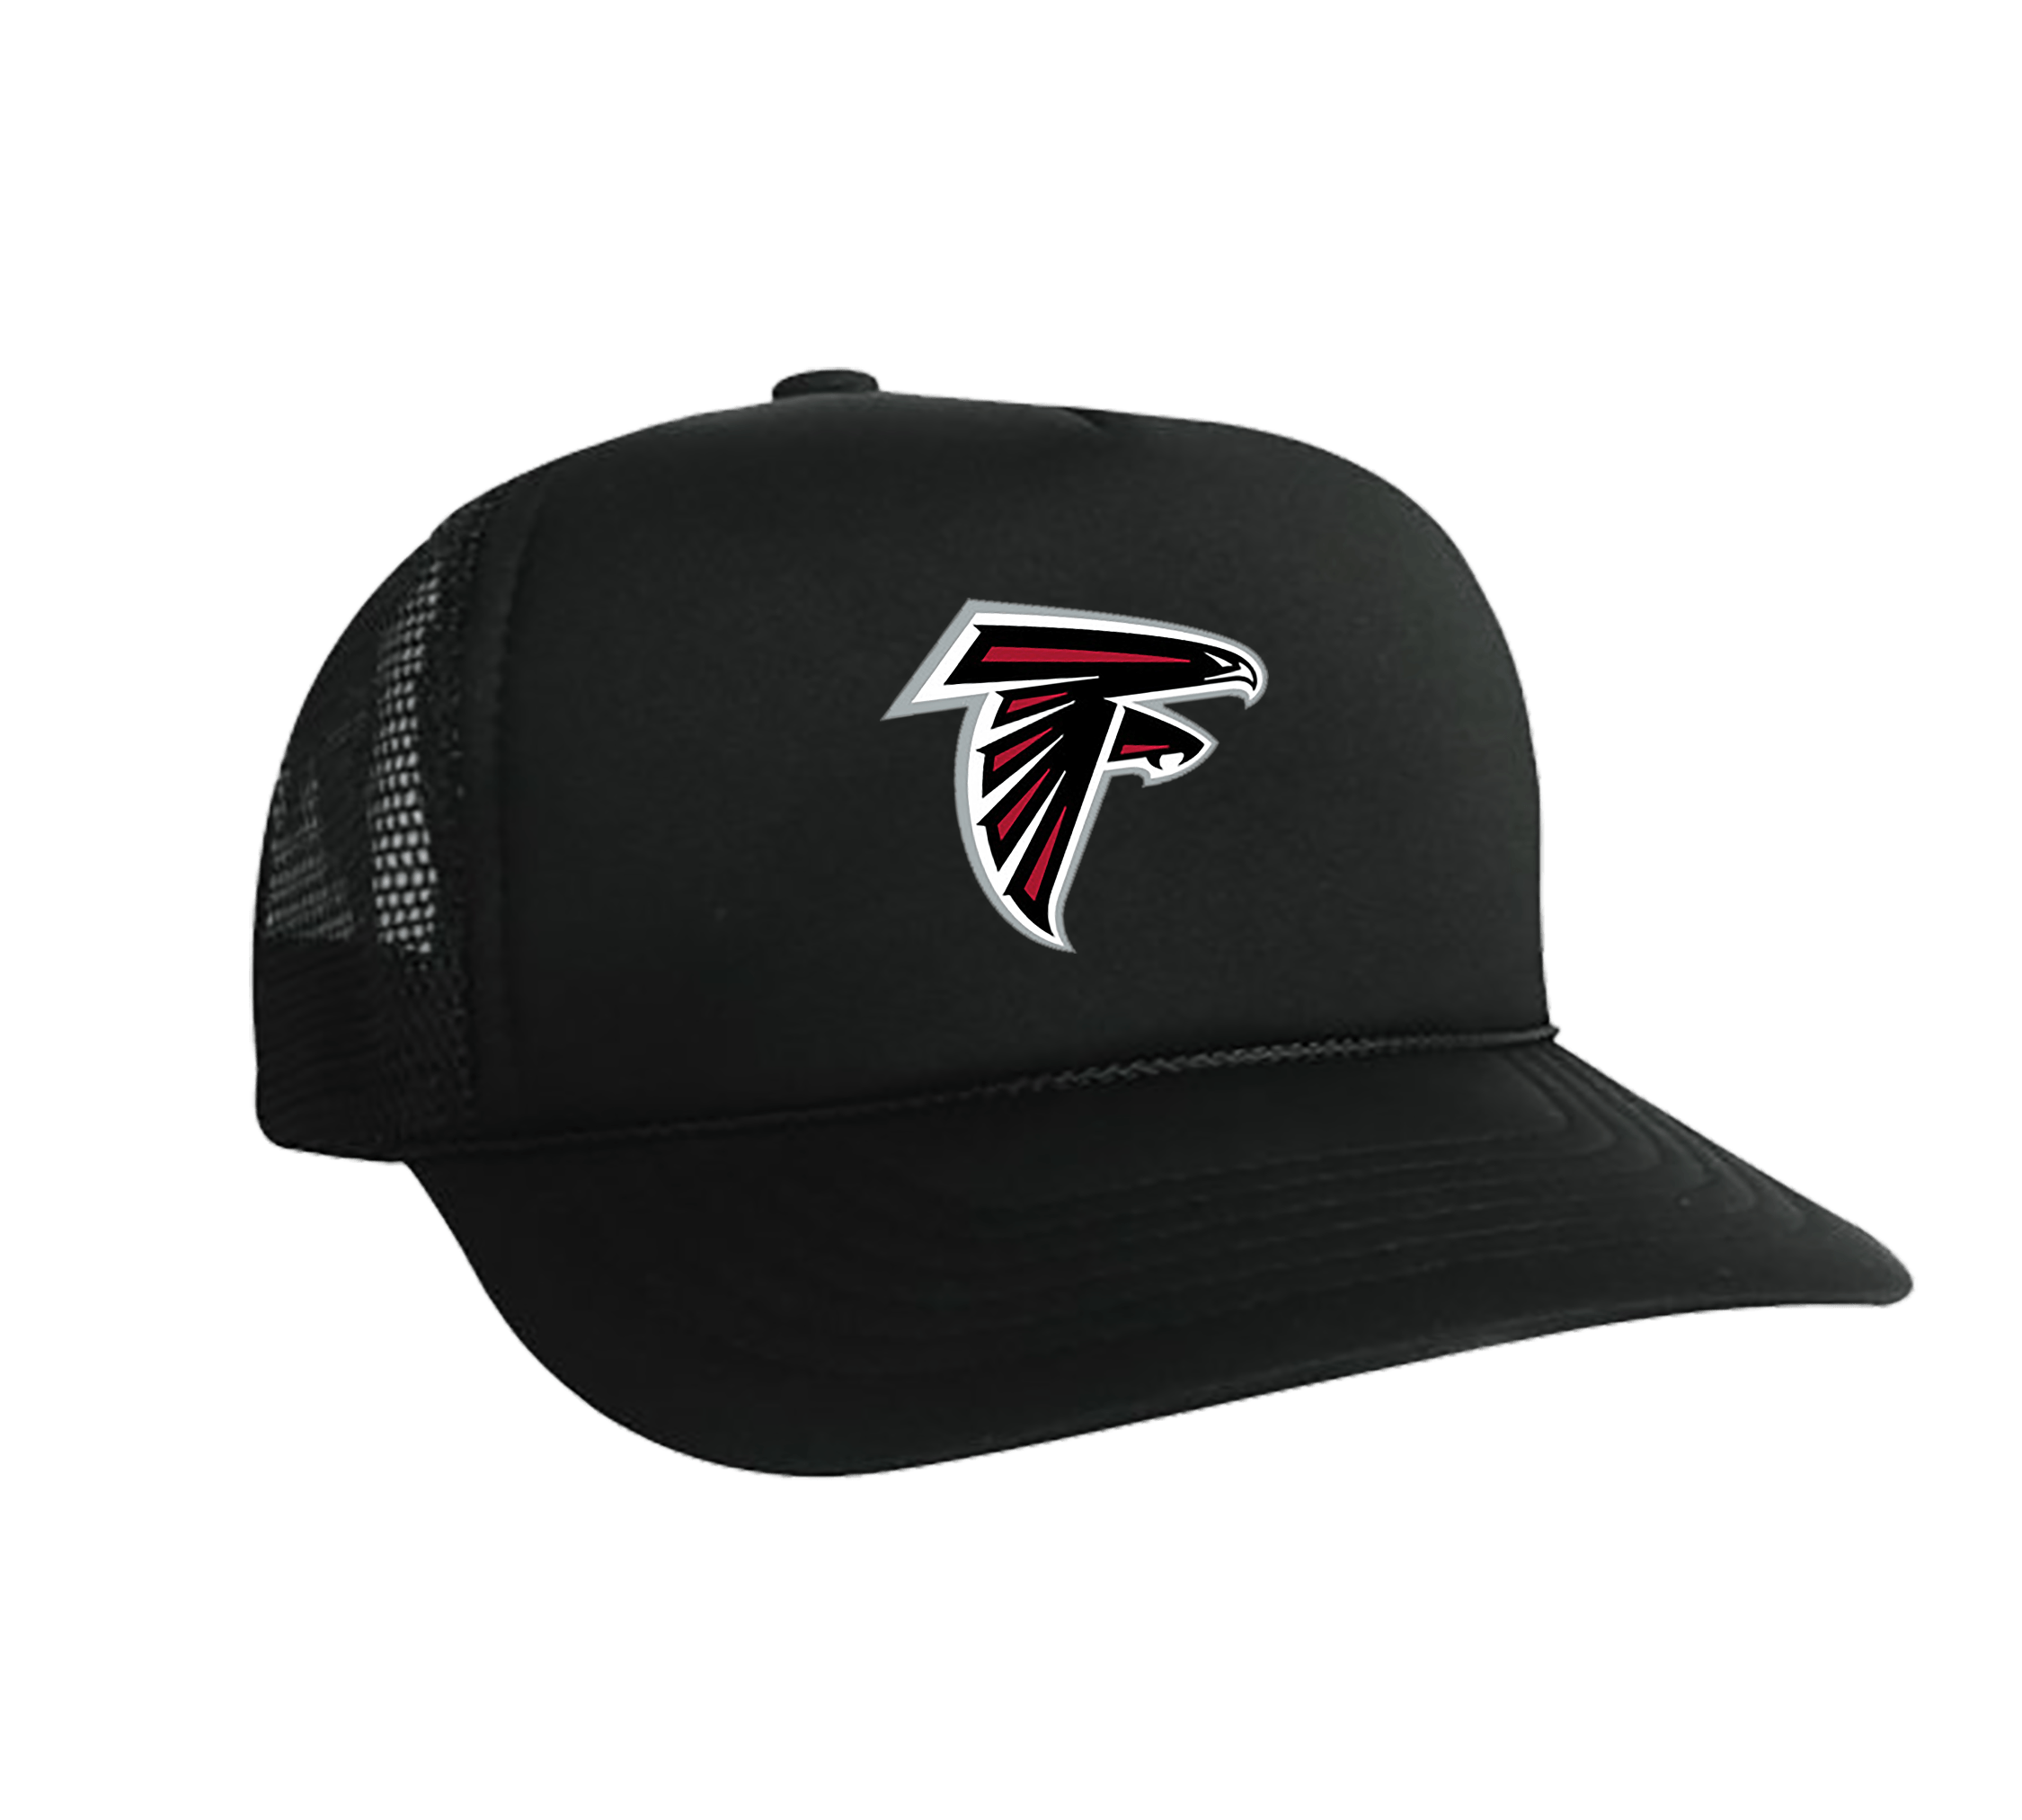 NFL Falcons Logo - NFL FALCONS LOGO BLACK PRINTED HAT